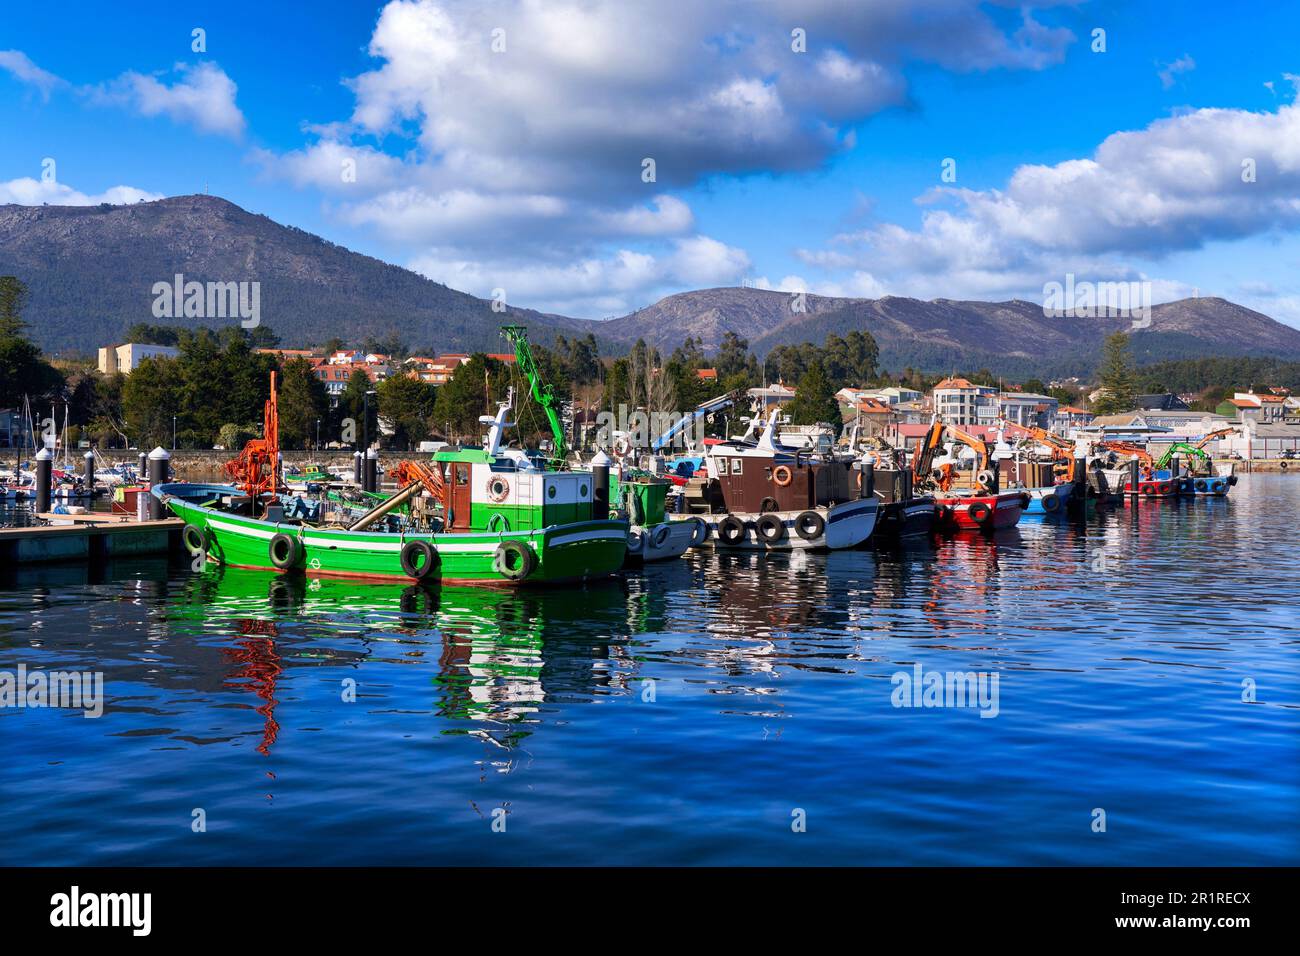 Combarro, Poio, Ria de Pontevedra, Galice, Espagne. Combarro est un port de pêche côtier situé dans la Ria de Pontevedra, dans la province de Pontevedra Banque D'Images